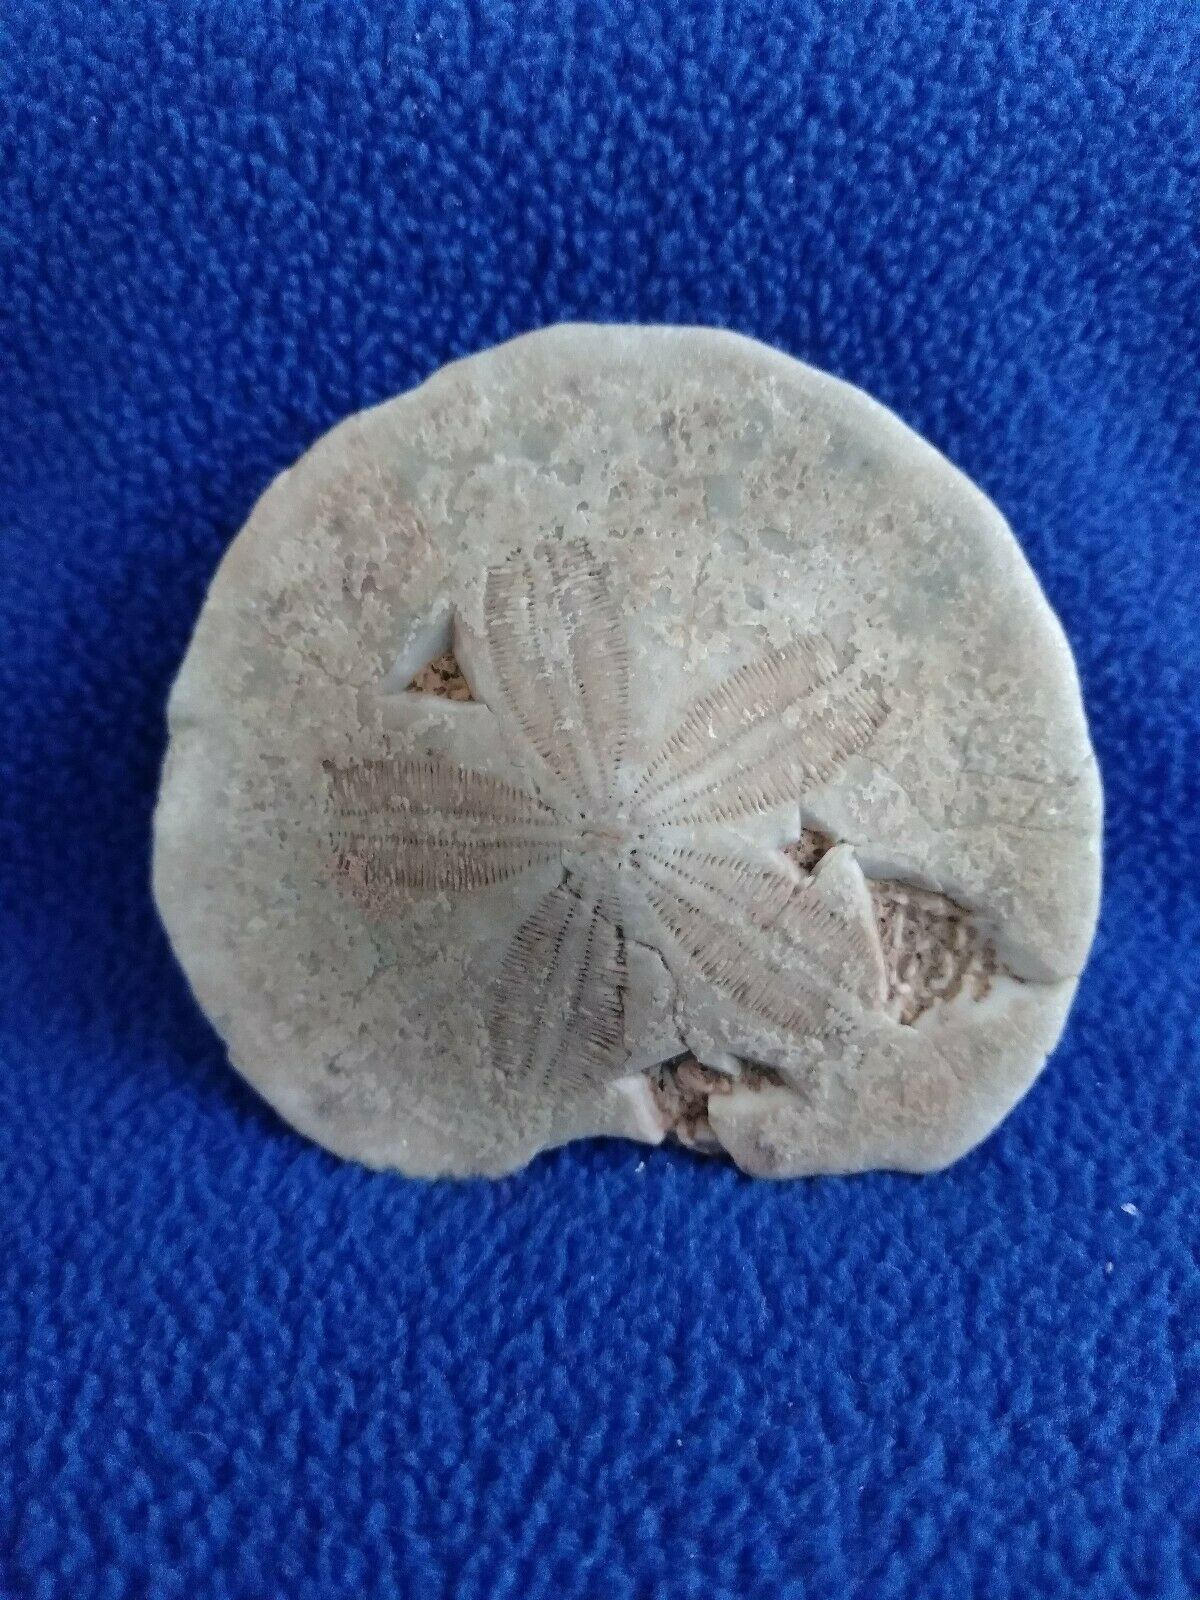 S34 Fossilized Sand Dollar 53mm Echinoid Sea Urchin Echinoderm Class Echinoidea